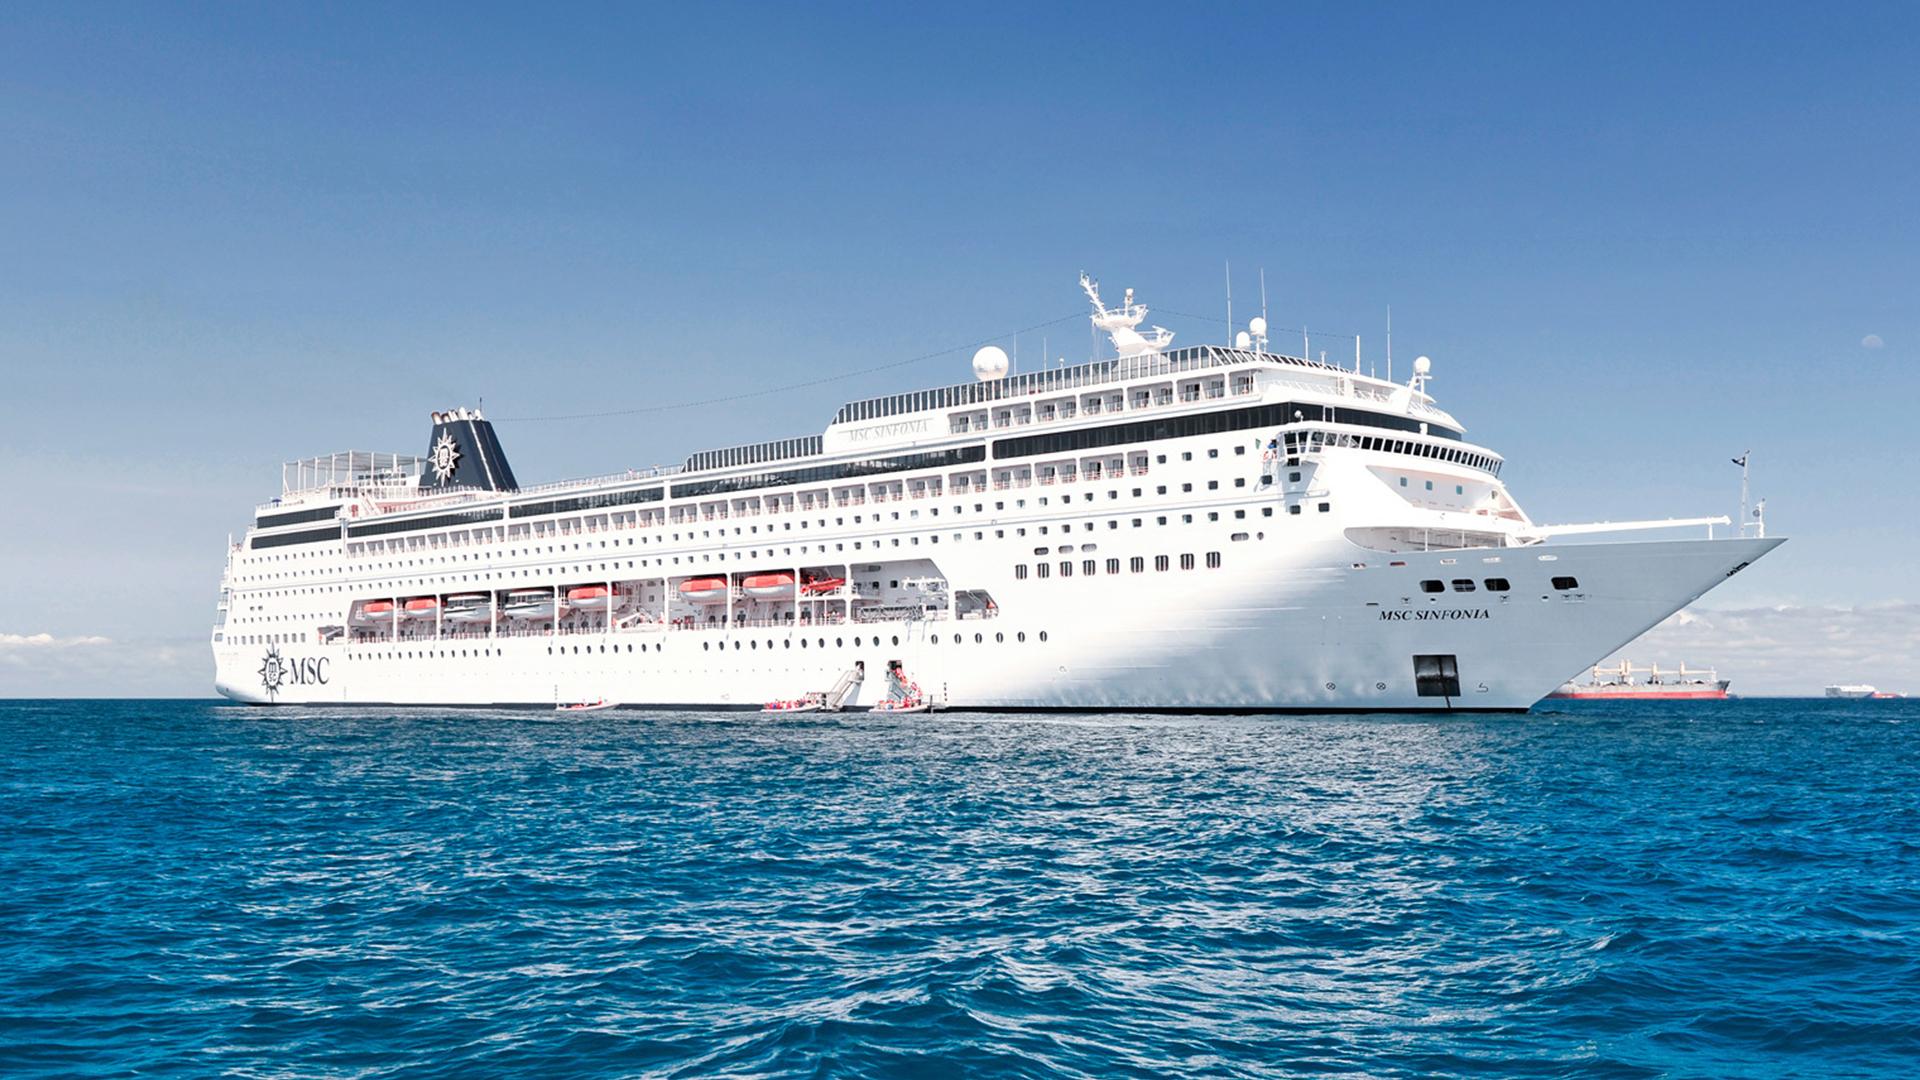 msc cruise ship genoa